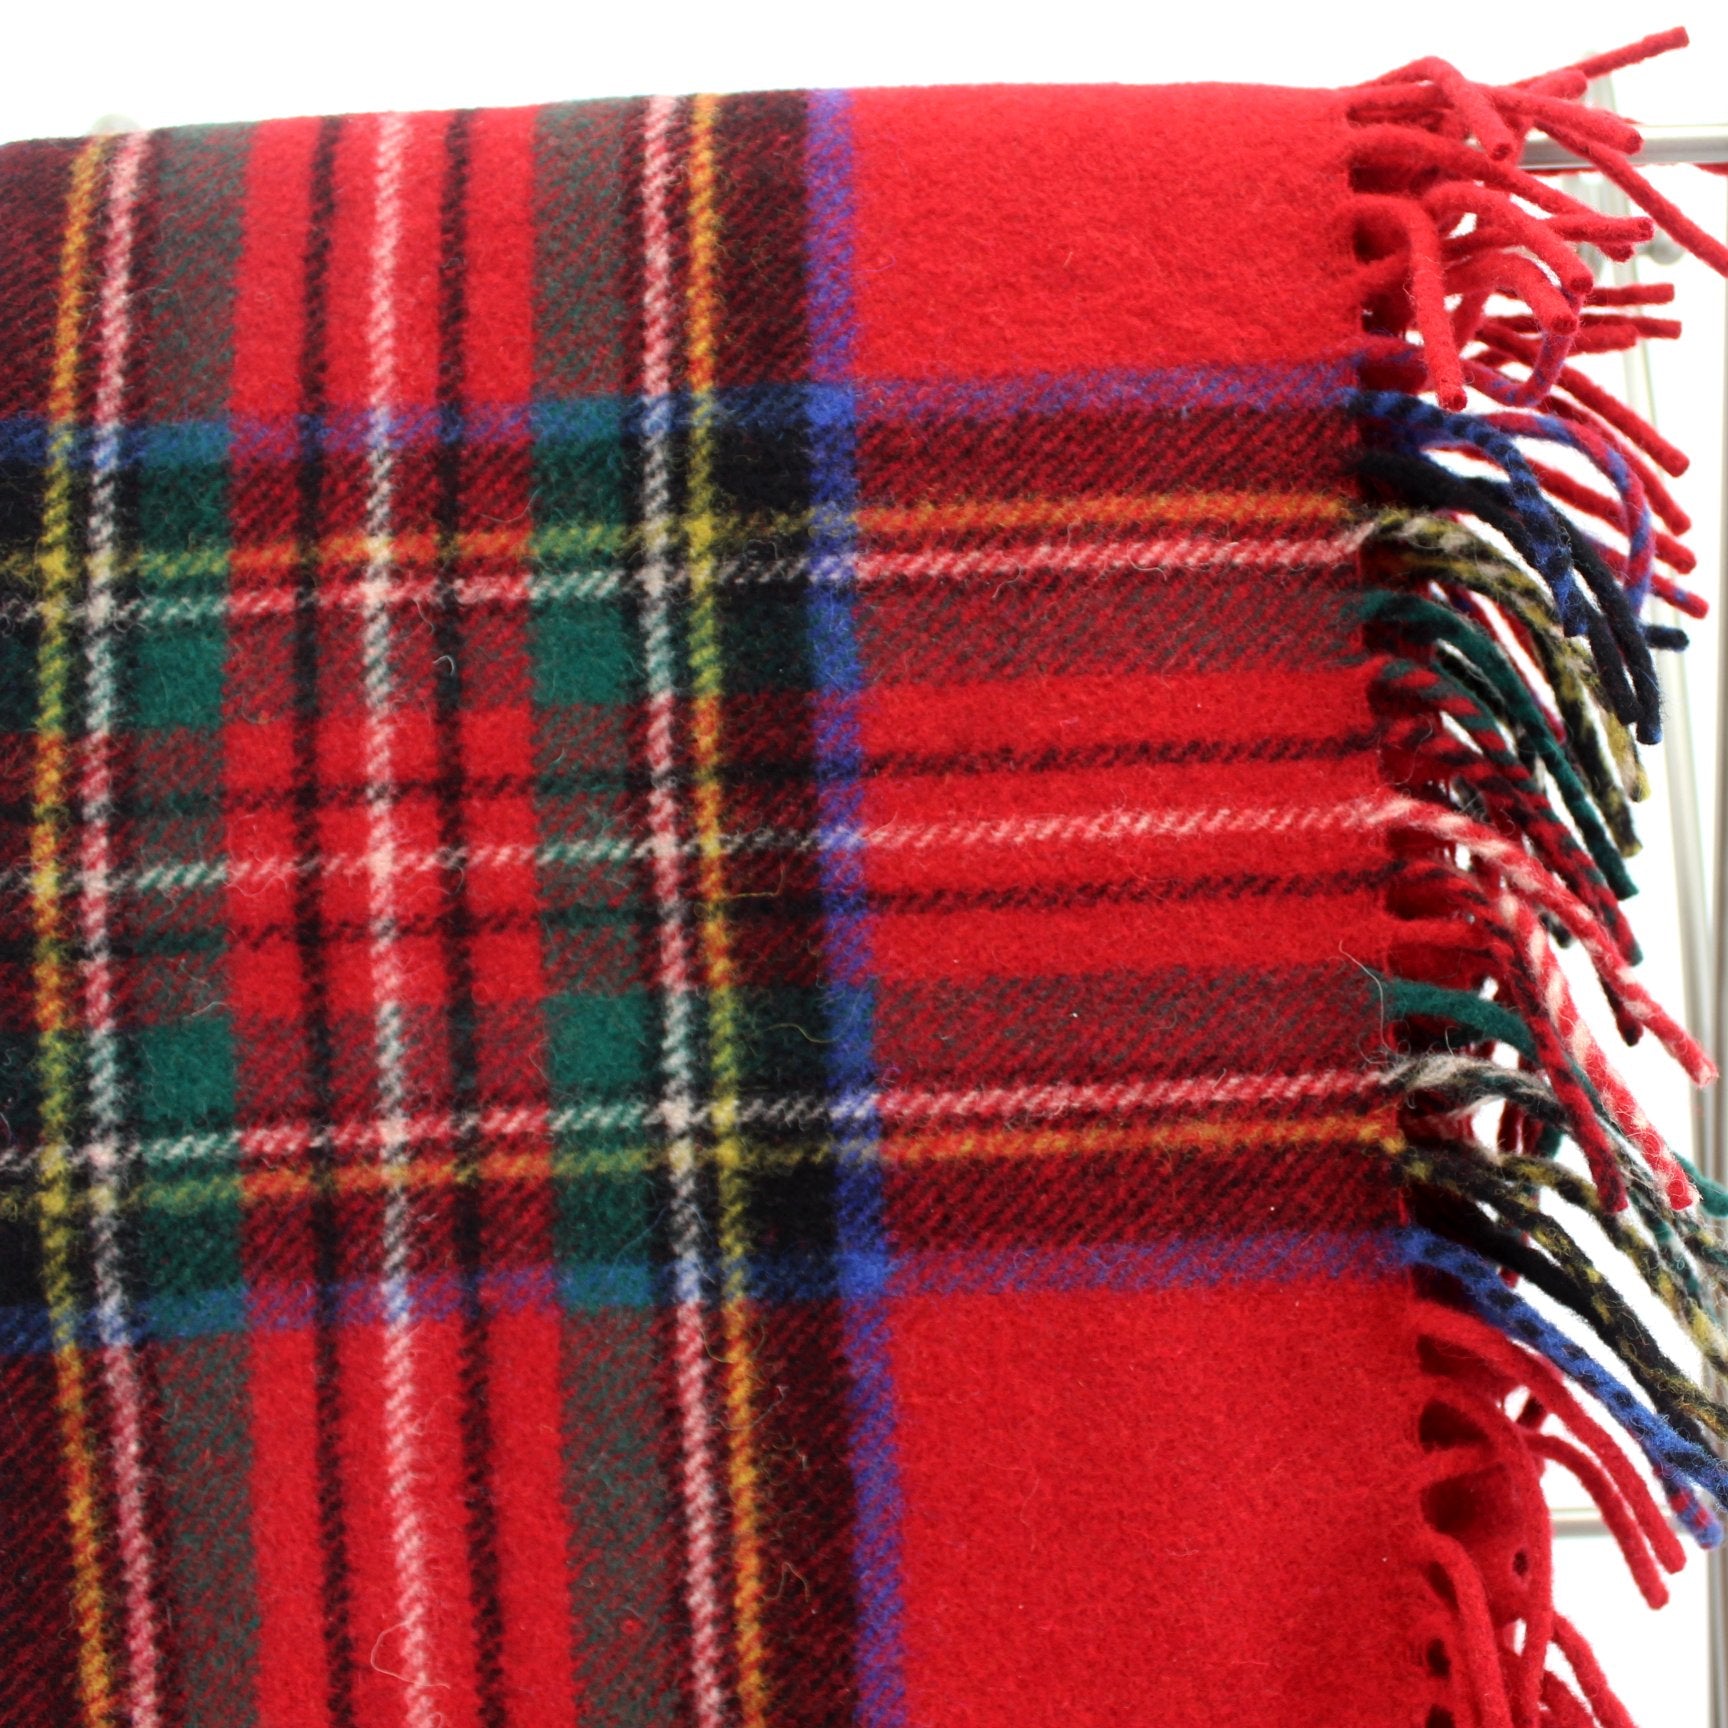 Classic Wool Throw Blanket Red Plaid Made Romania Heavy Dense closeup view